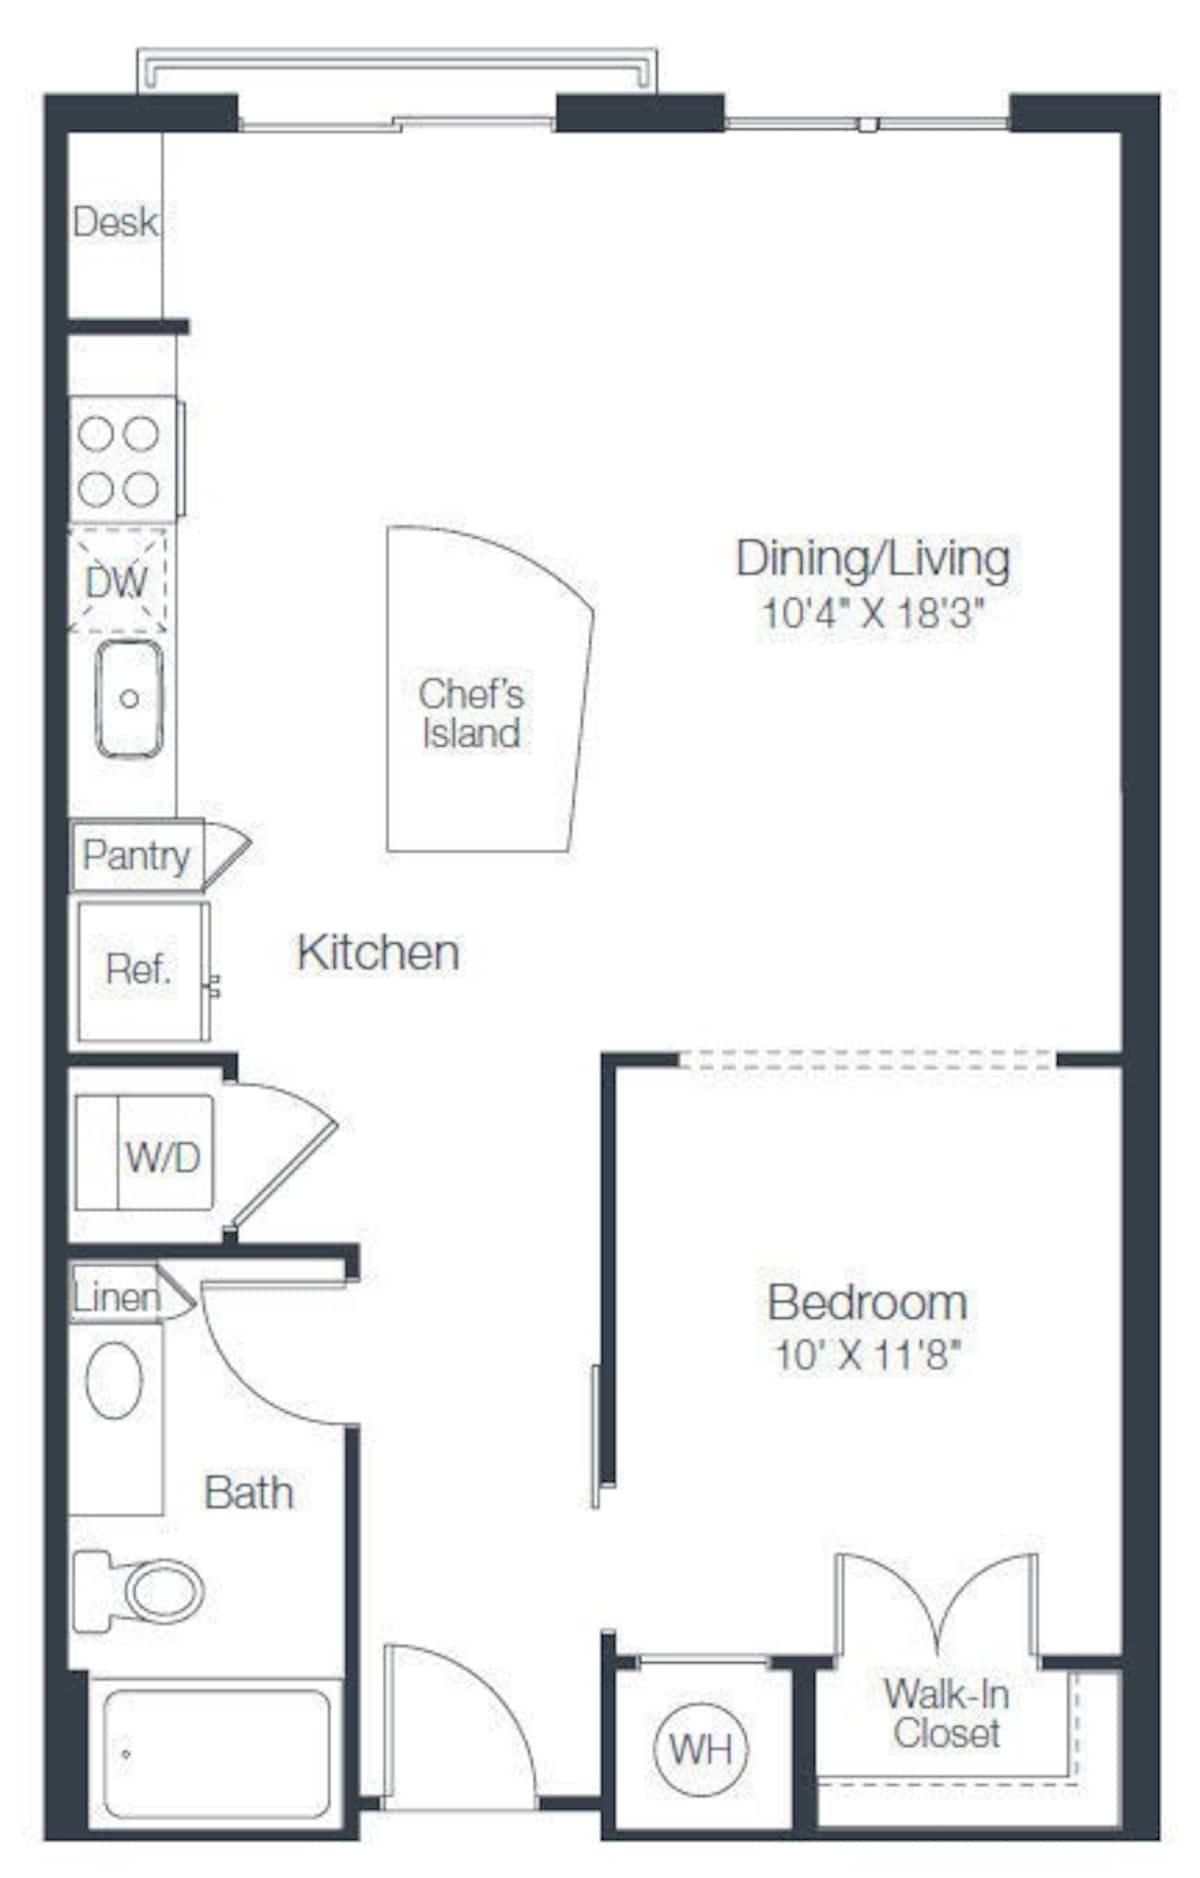 Floorplan diagram for A1d, showing 1 bedroom